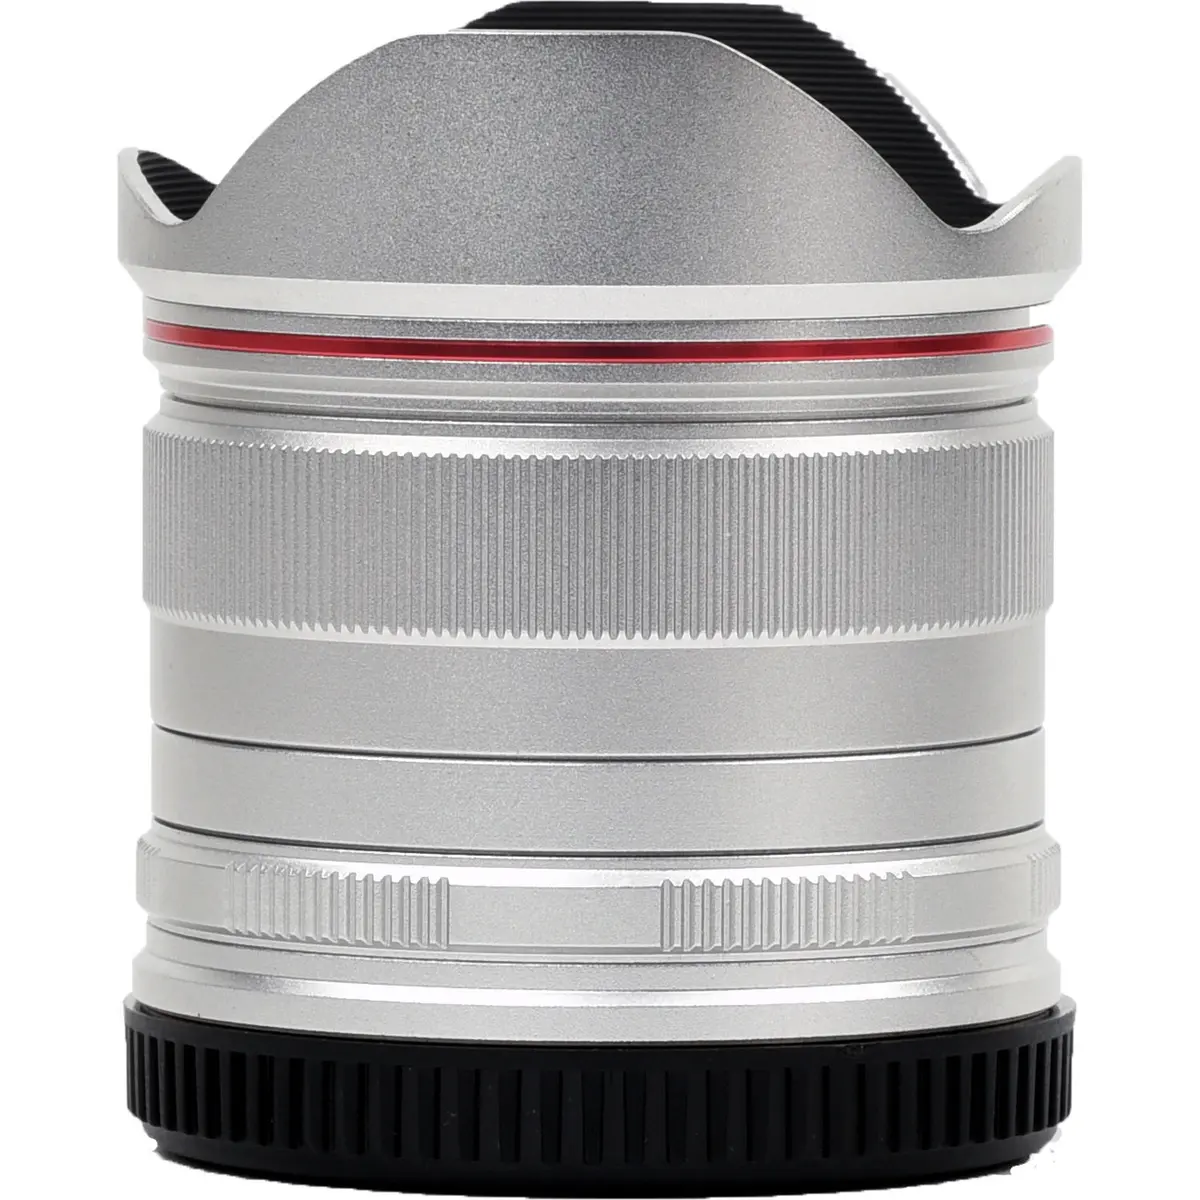 3. LAOWA Lens 7.5mm F/2 MFT Silver (Standard Version)